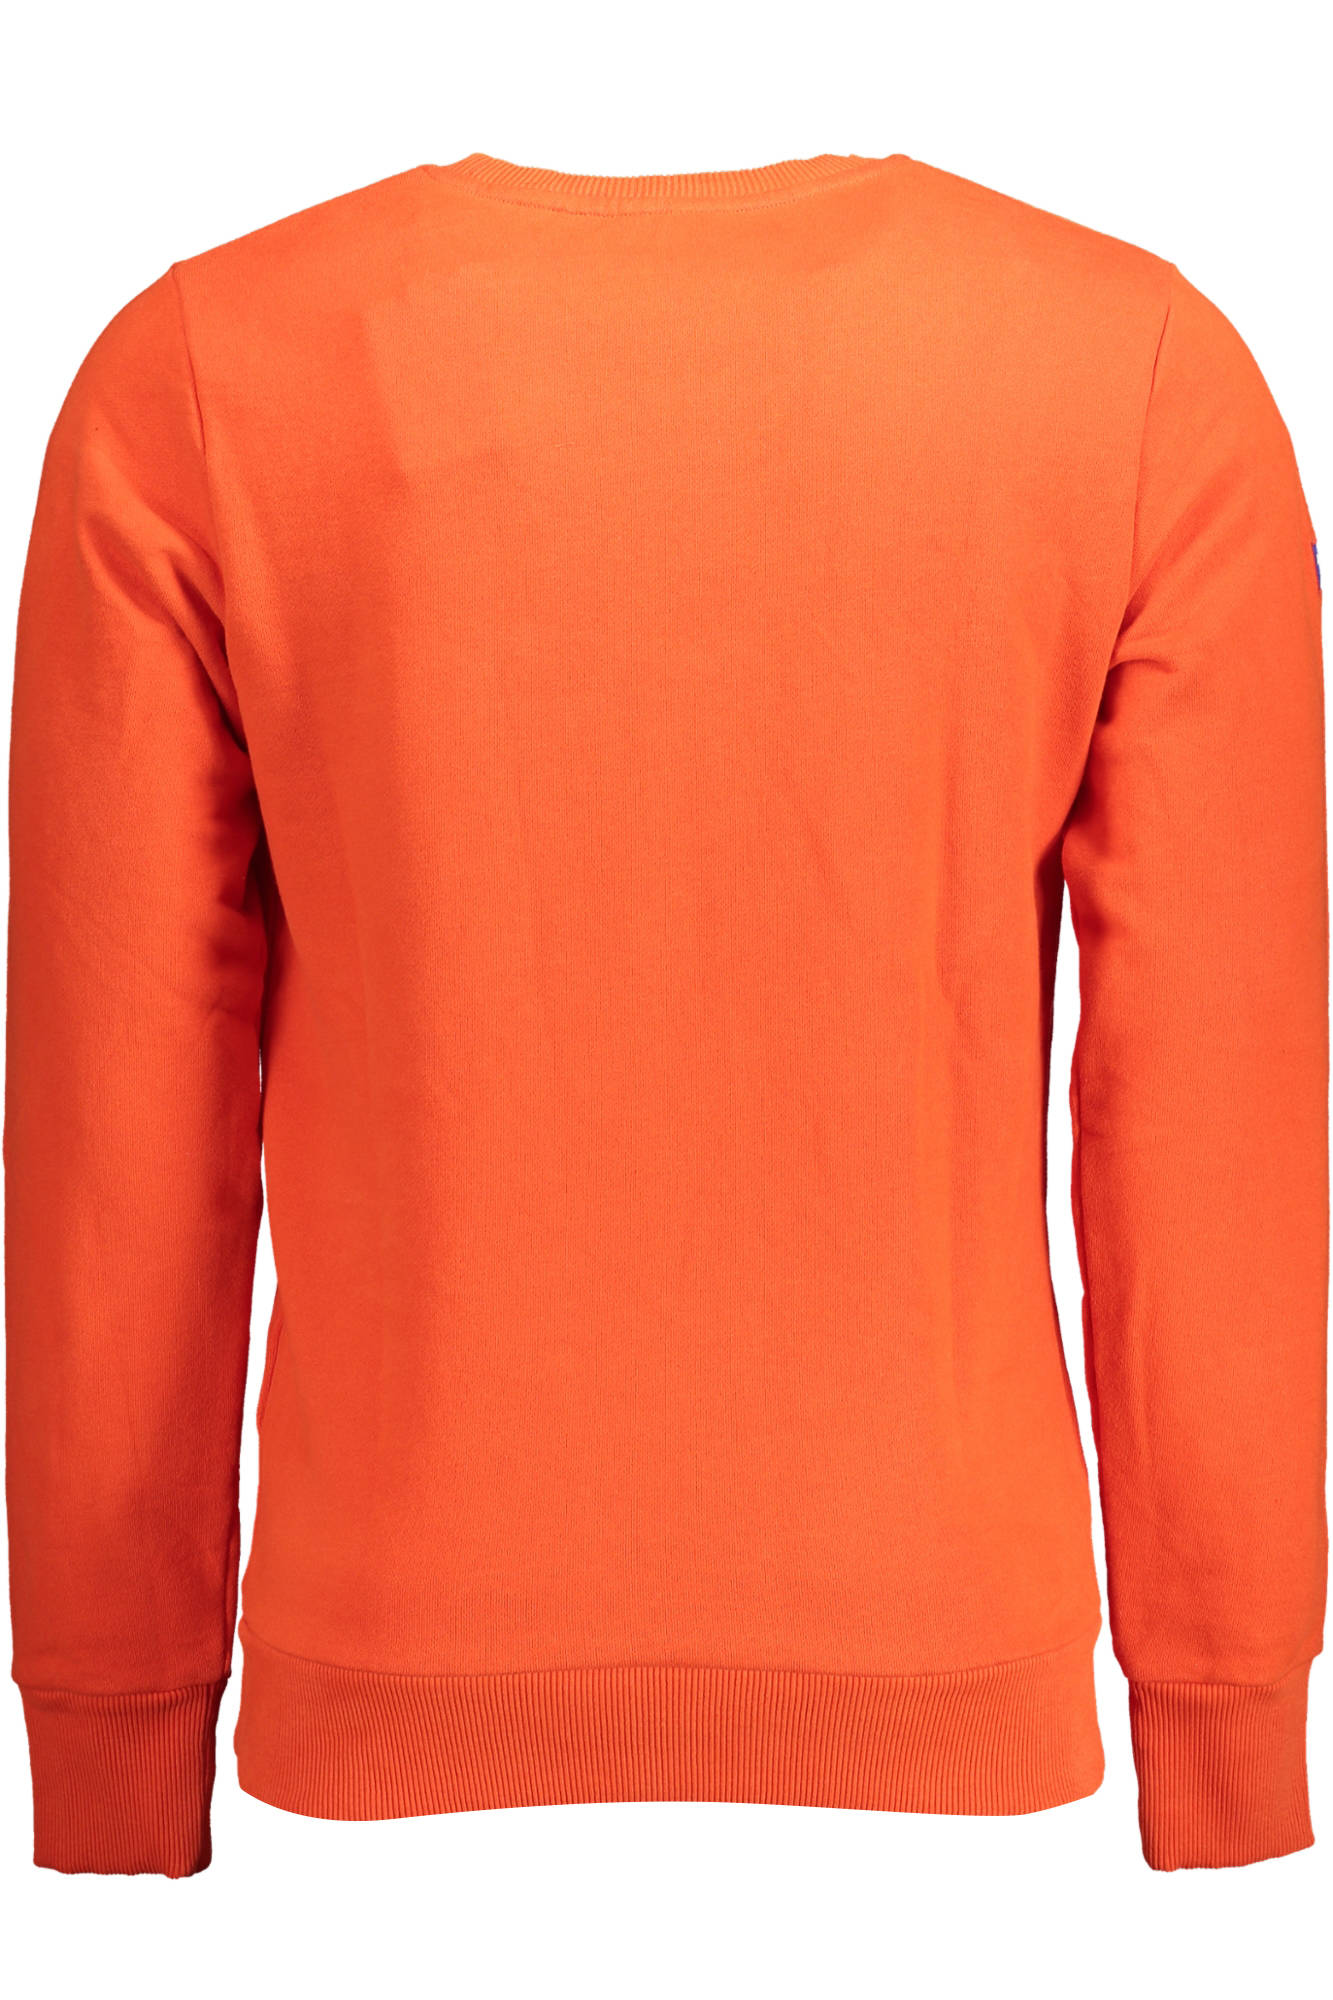 Superdry Orange Cotton Sweater - Fizigo